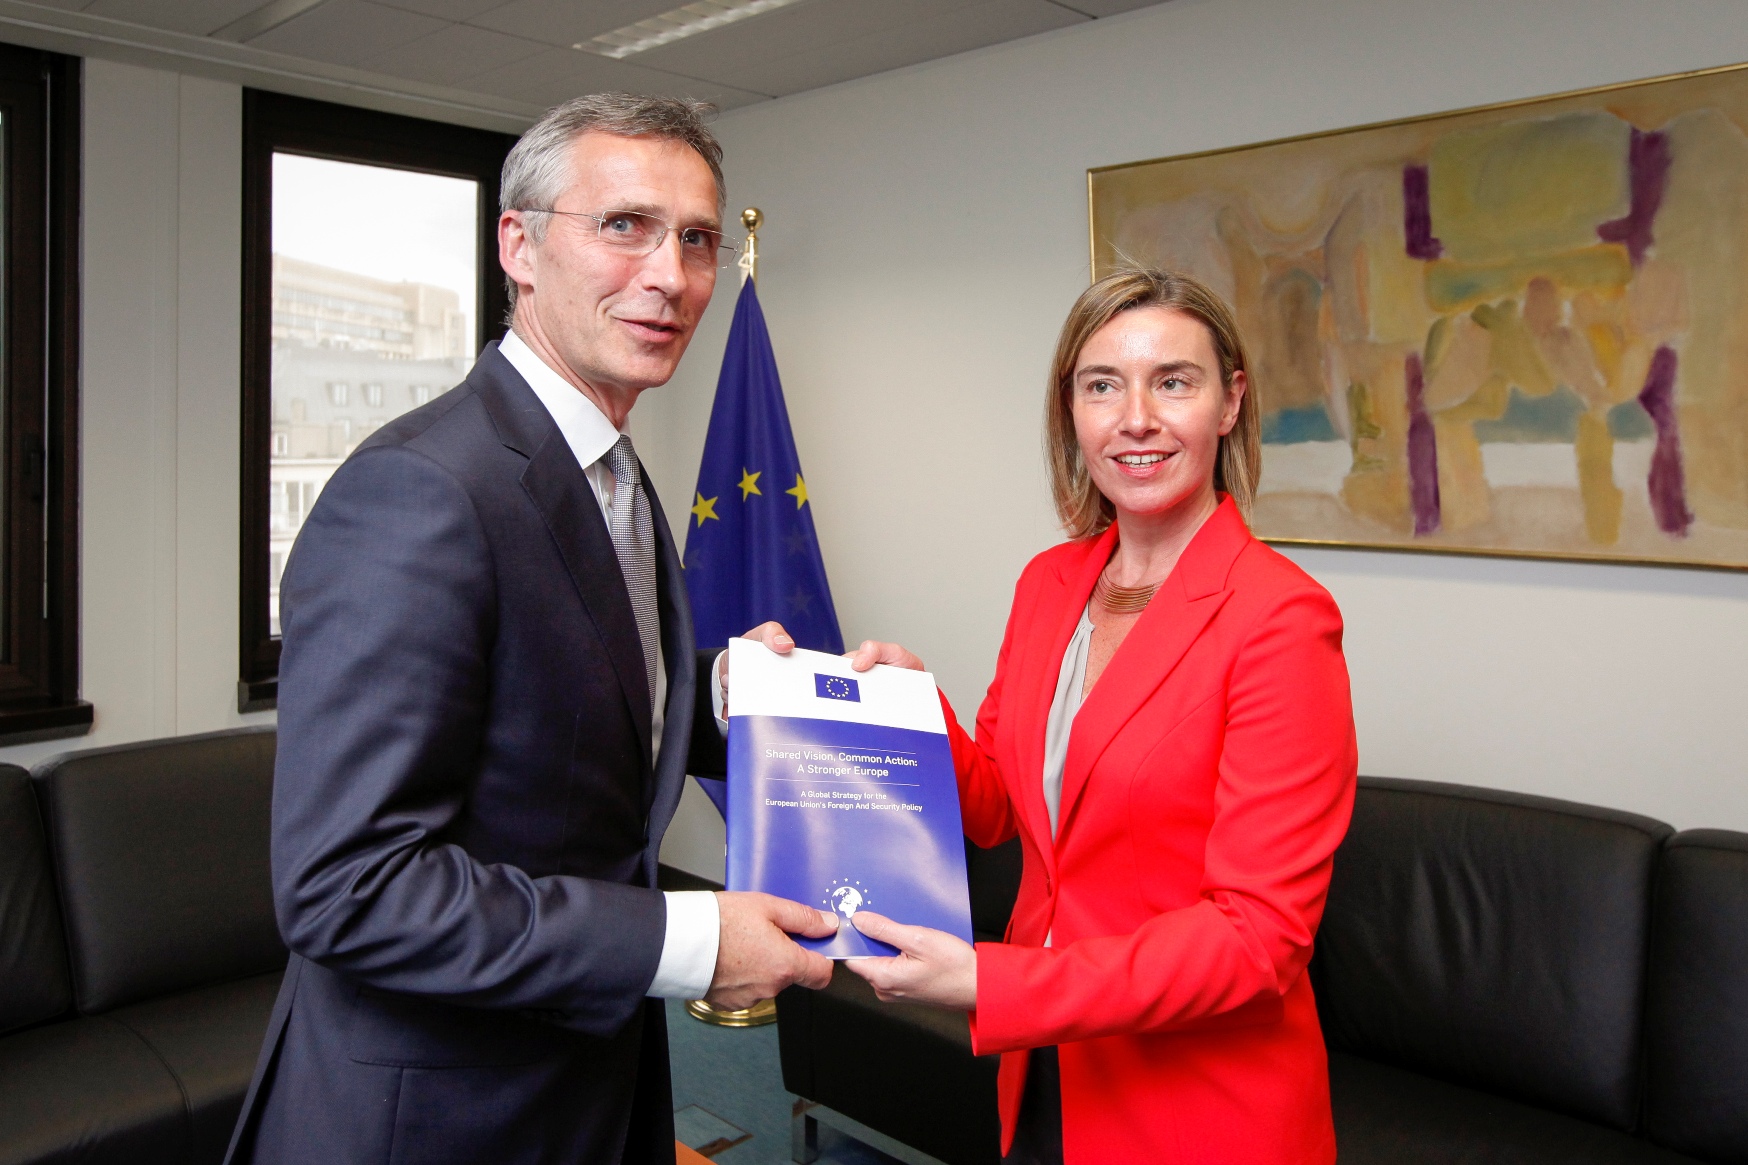 EU High Representative Federica Mogherini presenting the EU Global Strategy to NATO chief Jens Stoltenberg